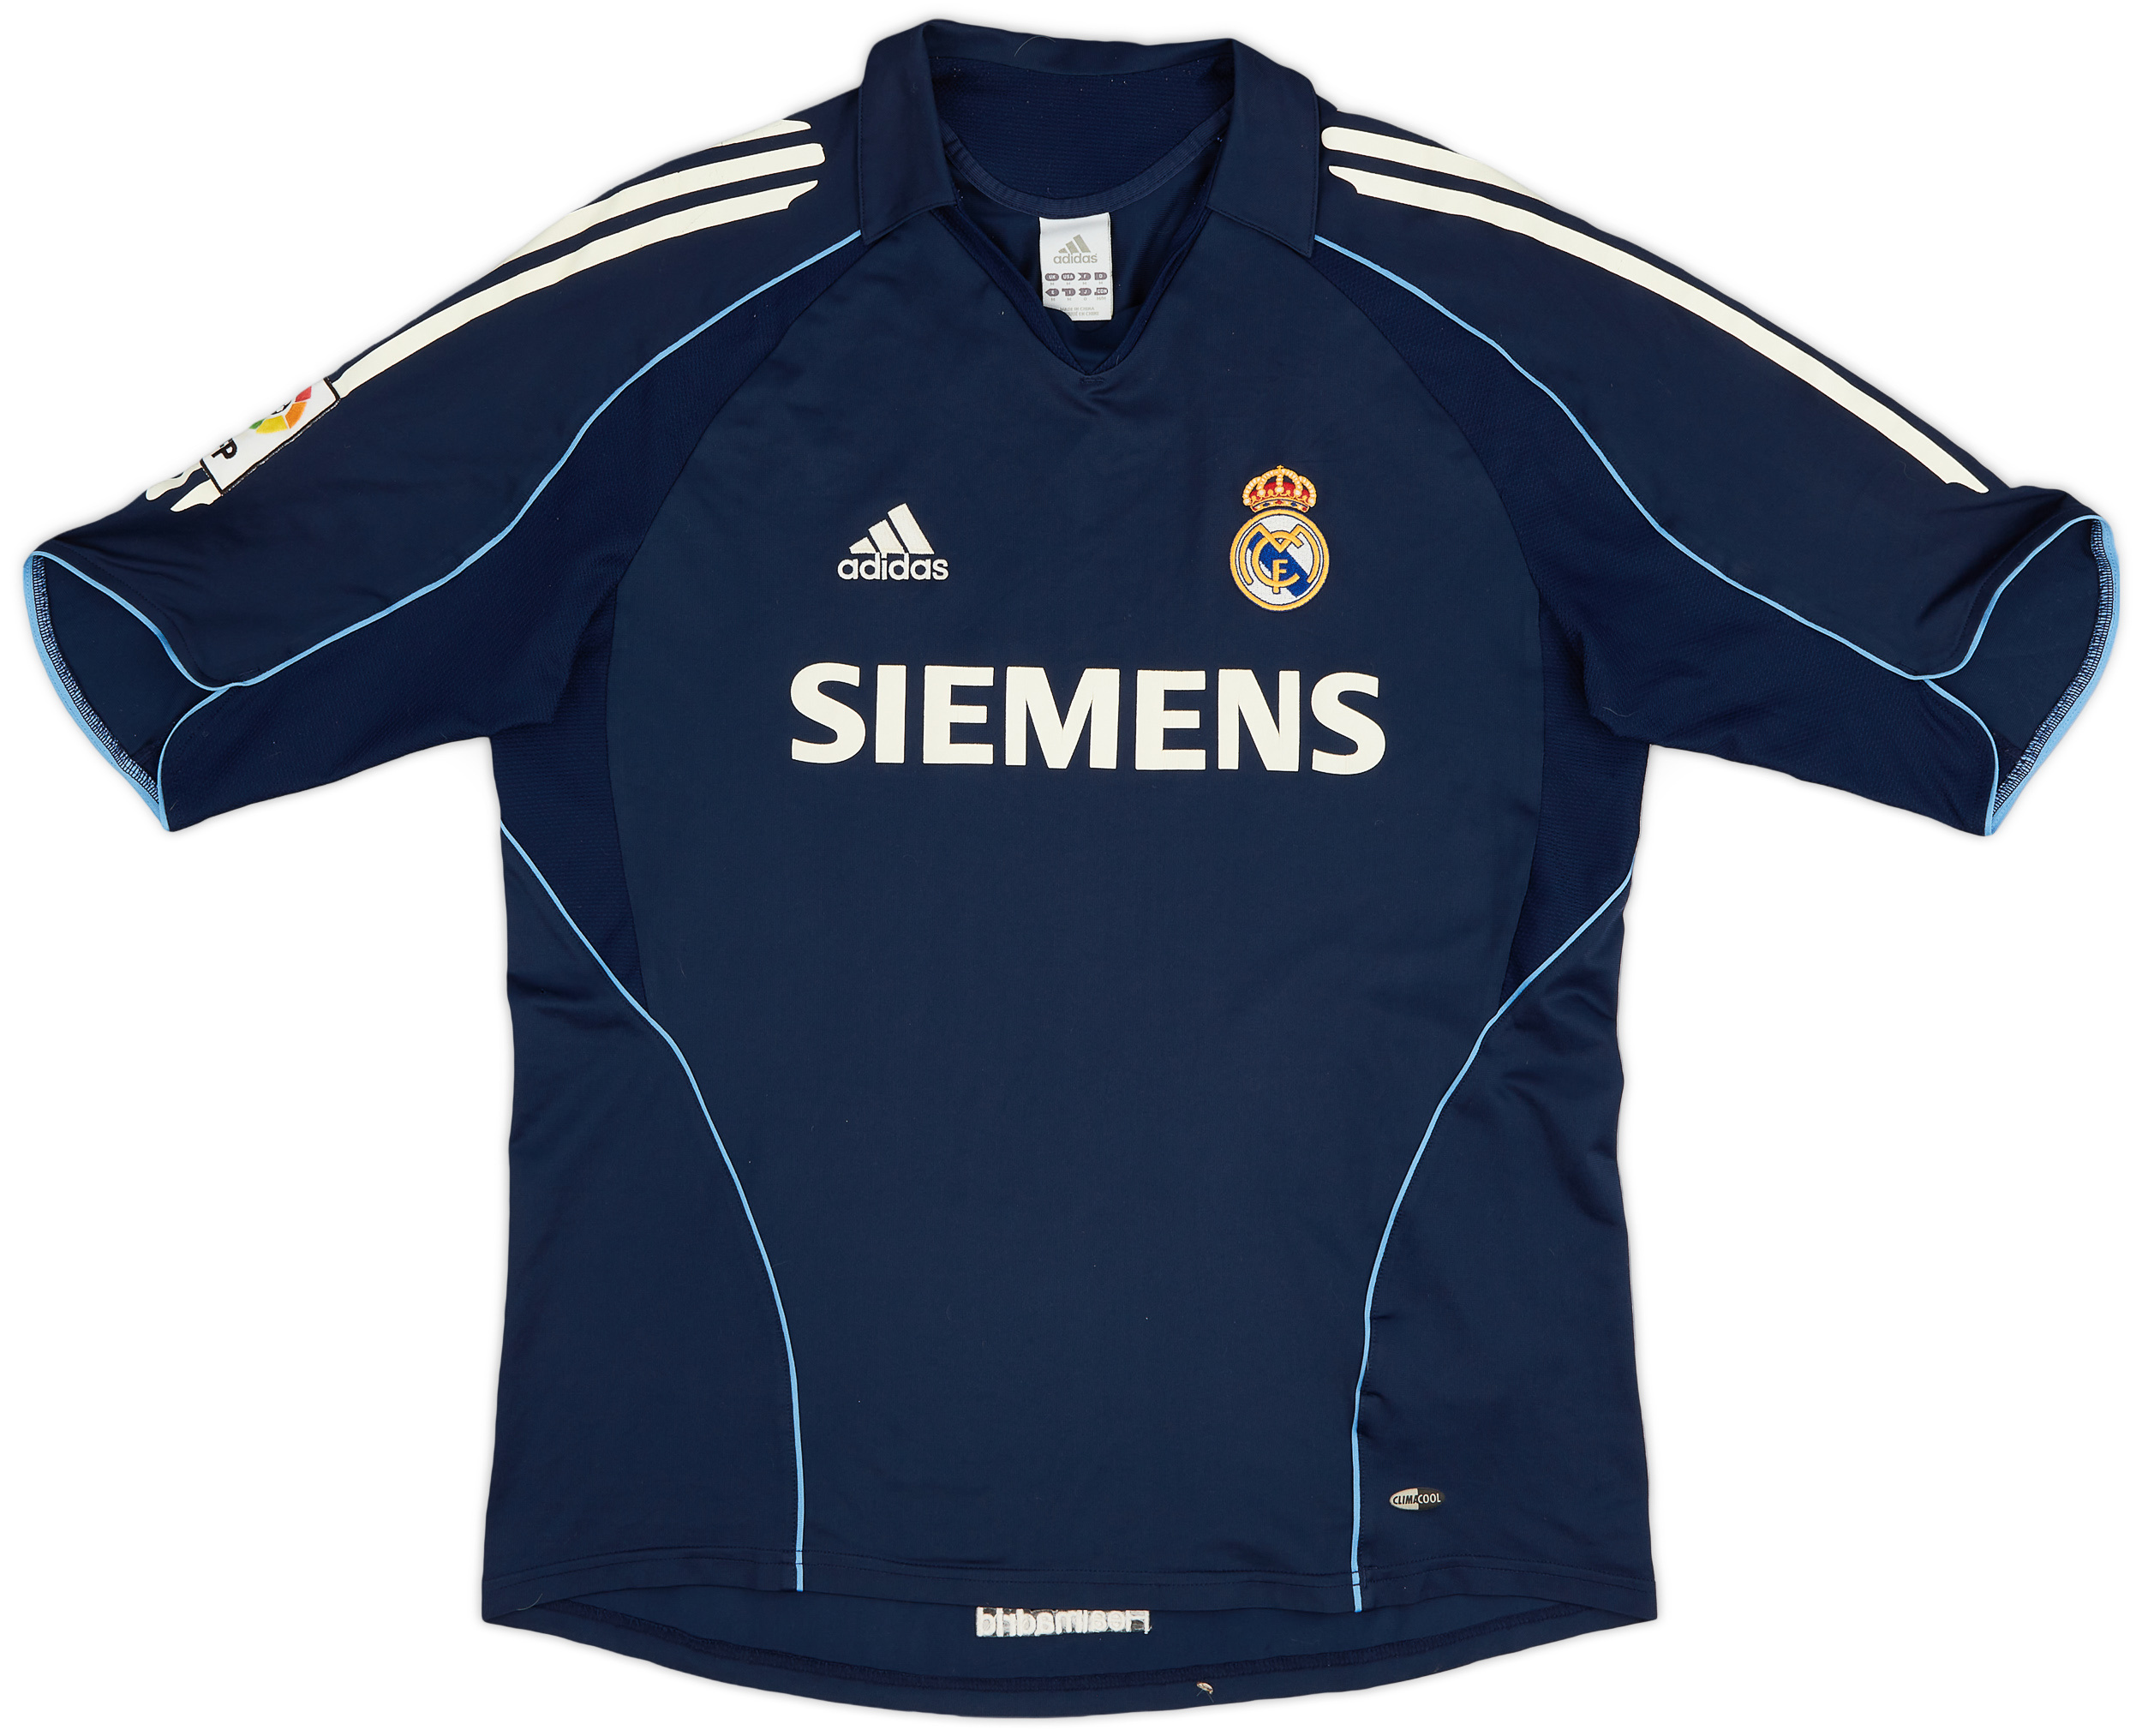 2005-06 Real Madrid Away Shirt - 7/10 - ()